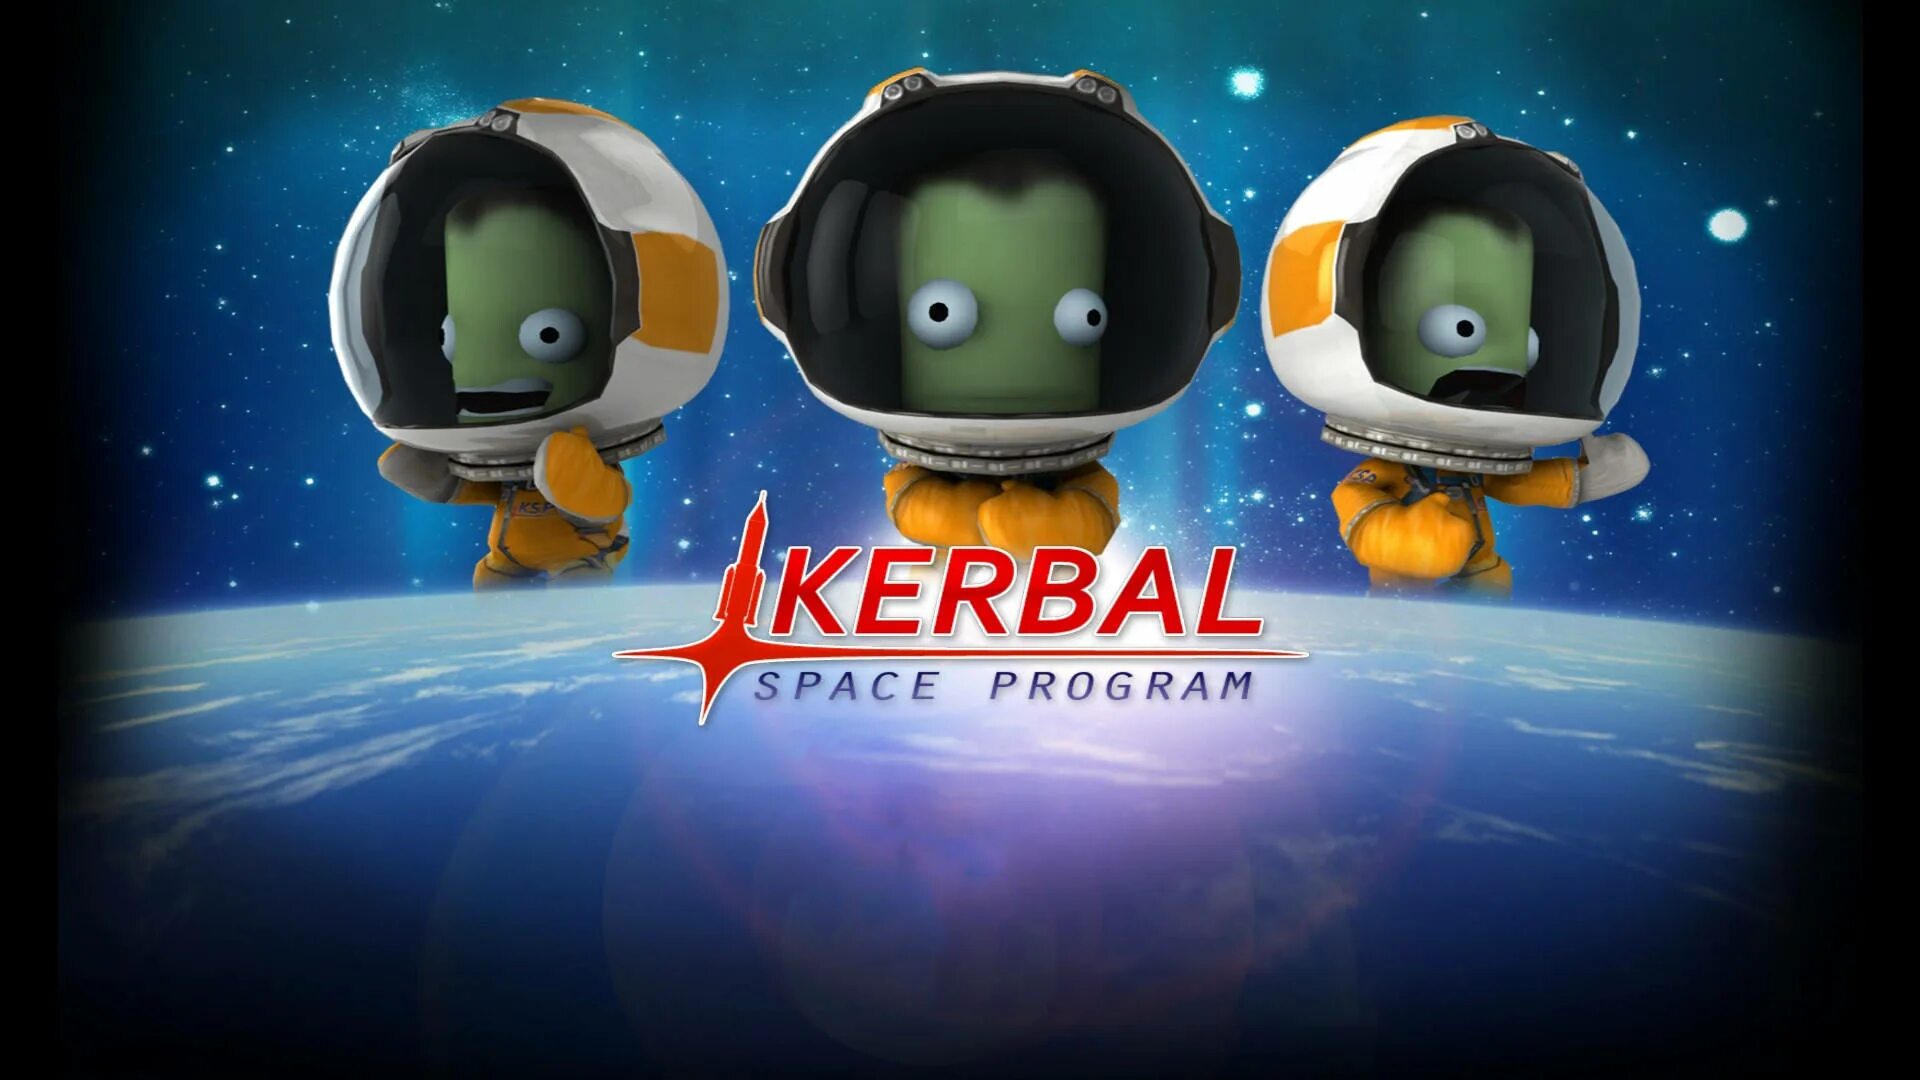 Space programme. KSP обложка. Игра космонавты кербал. Кербал Спейс программ. Игра Kerbal Space program.